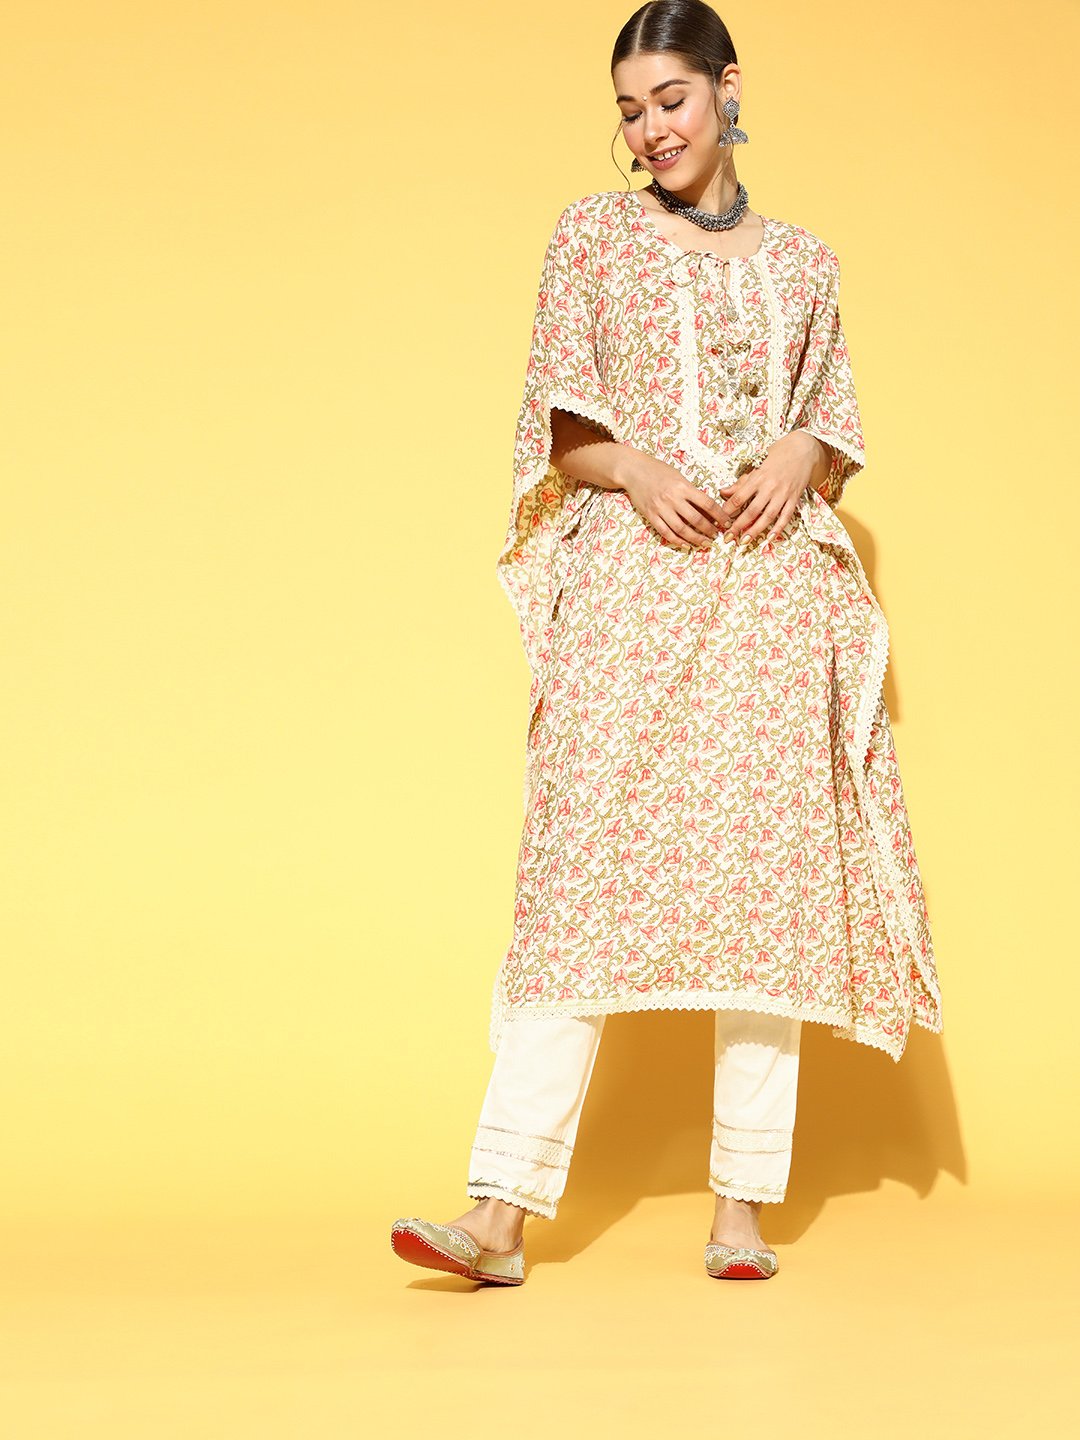 Ishin Women's Cotton Multicolor & White Embroidered Kaftan Kurta Trouser Set